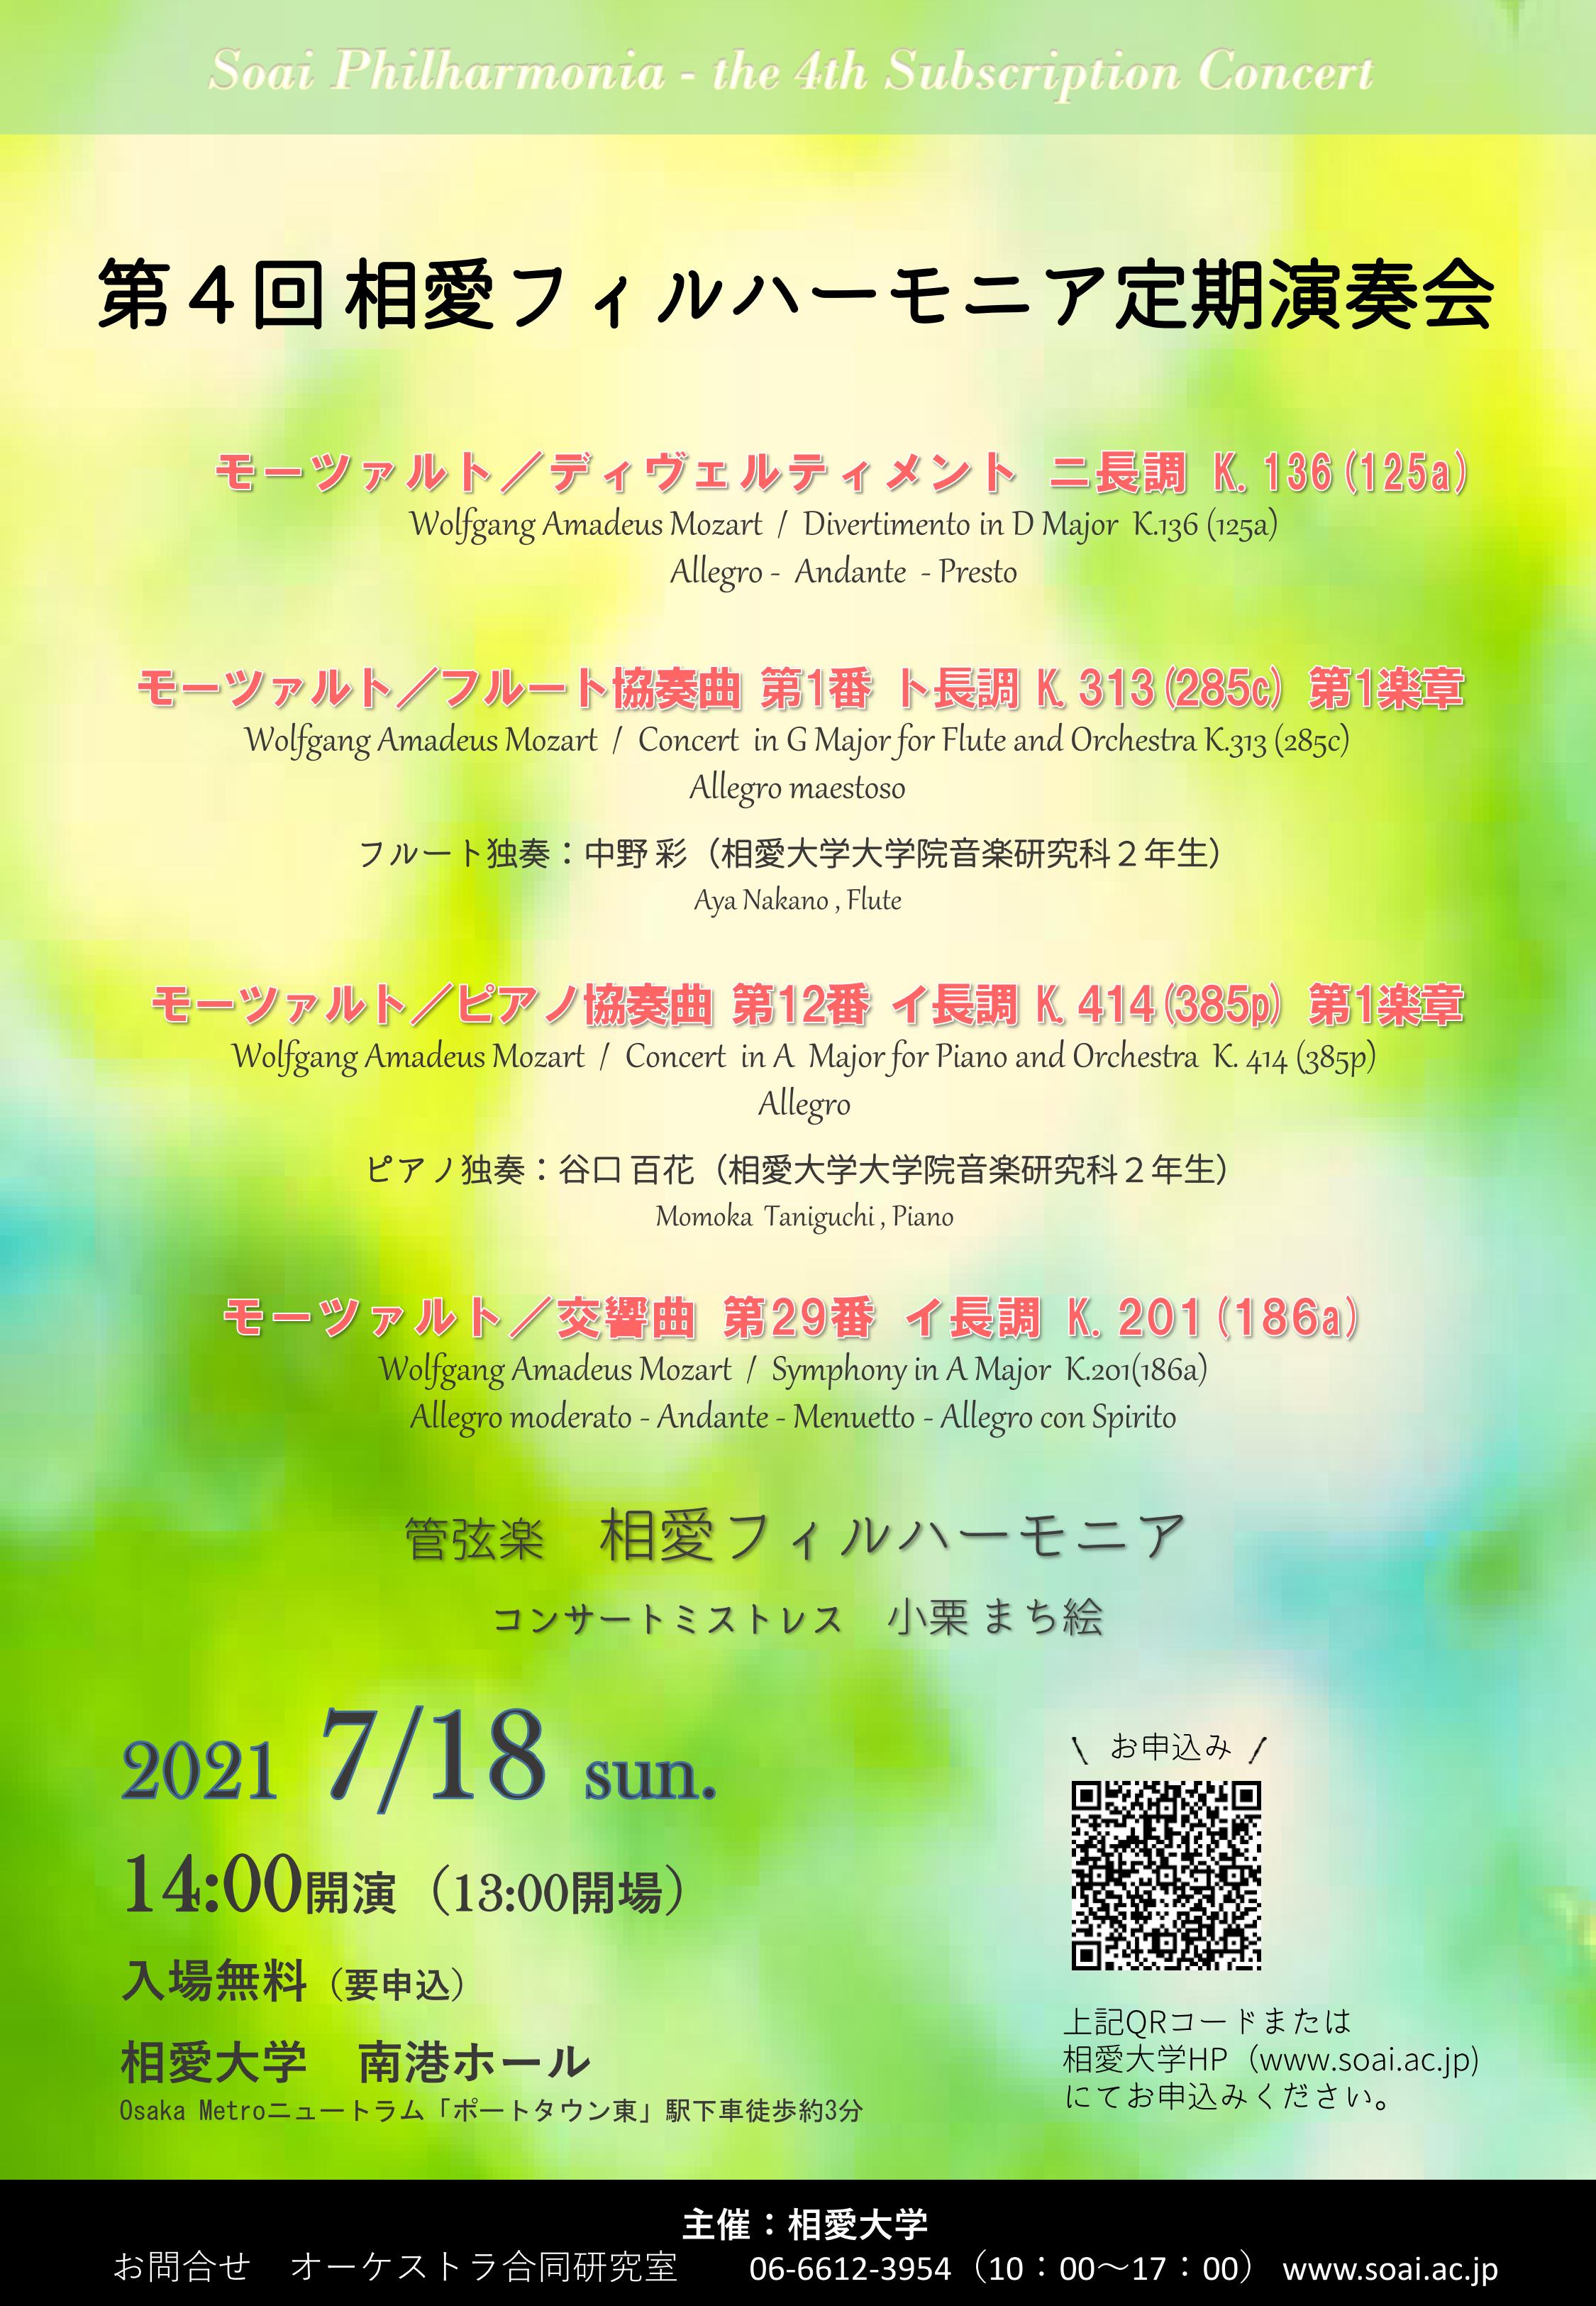 https://www.soai.ac.jp/information/event/20210718_soaiphil.jpg